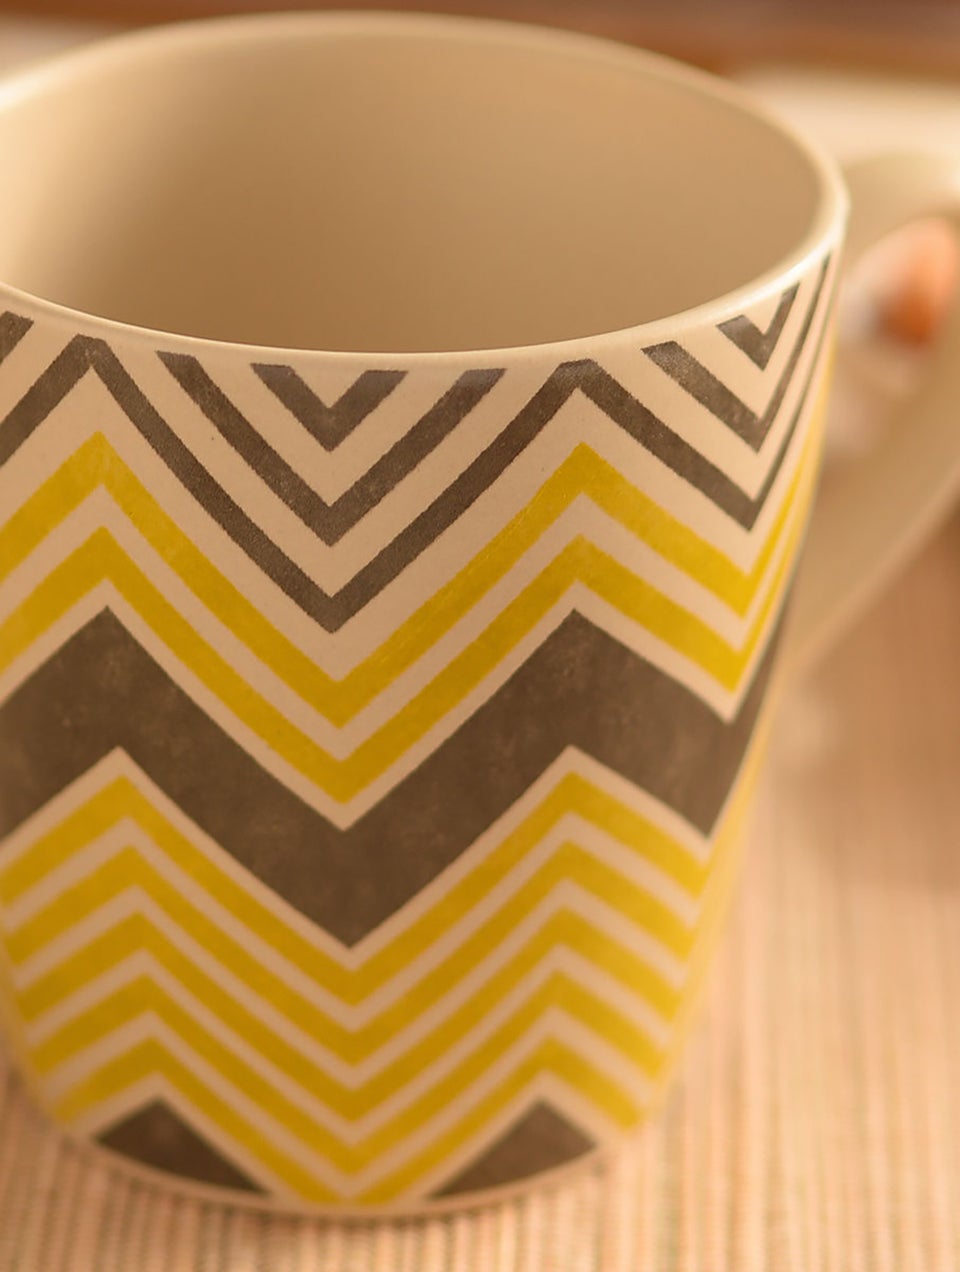 Printed Stoneware Coffee Mug